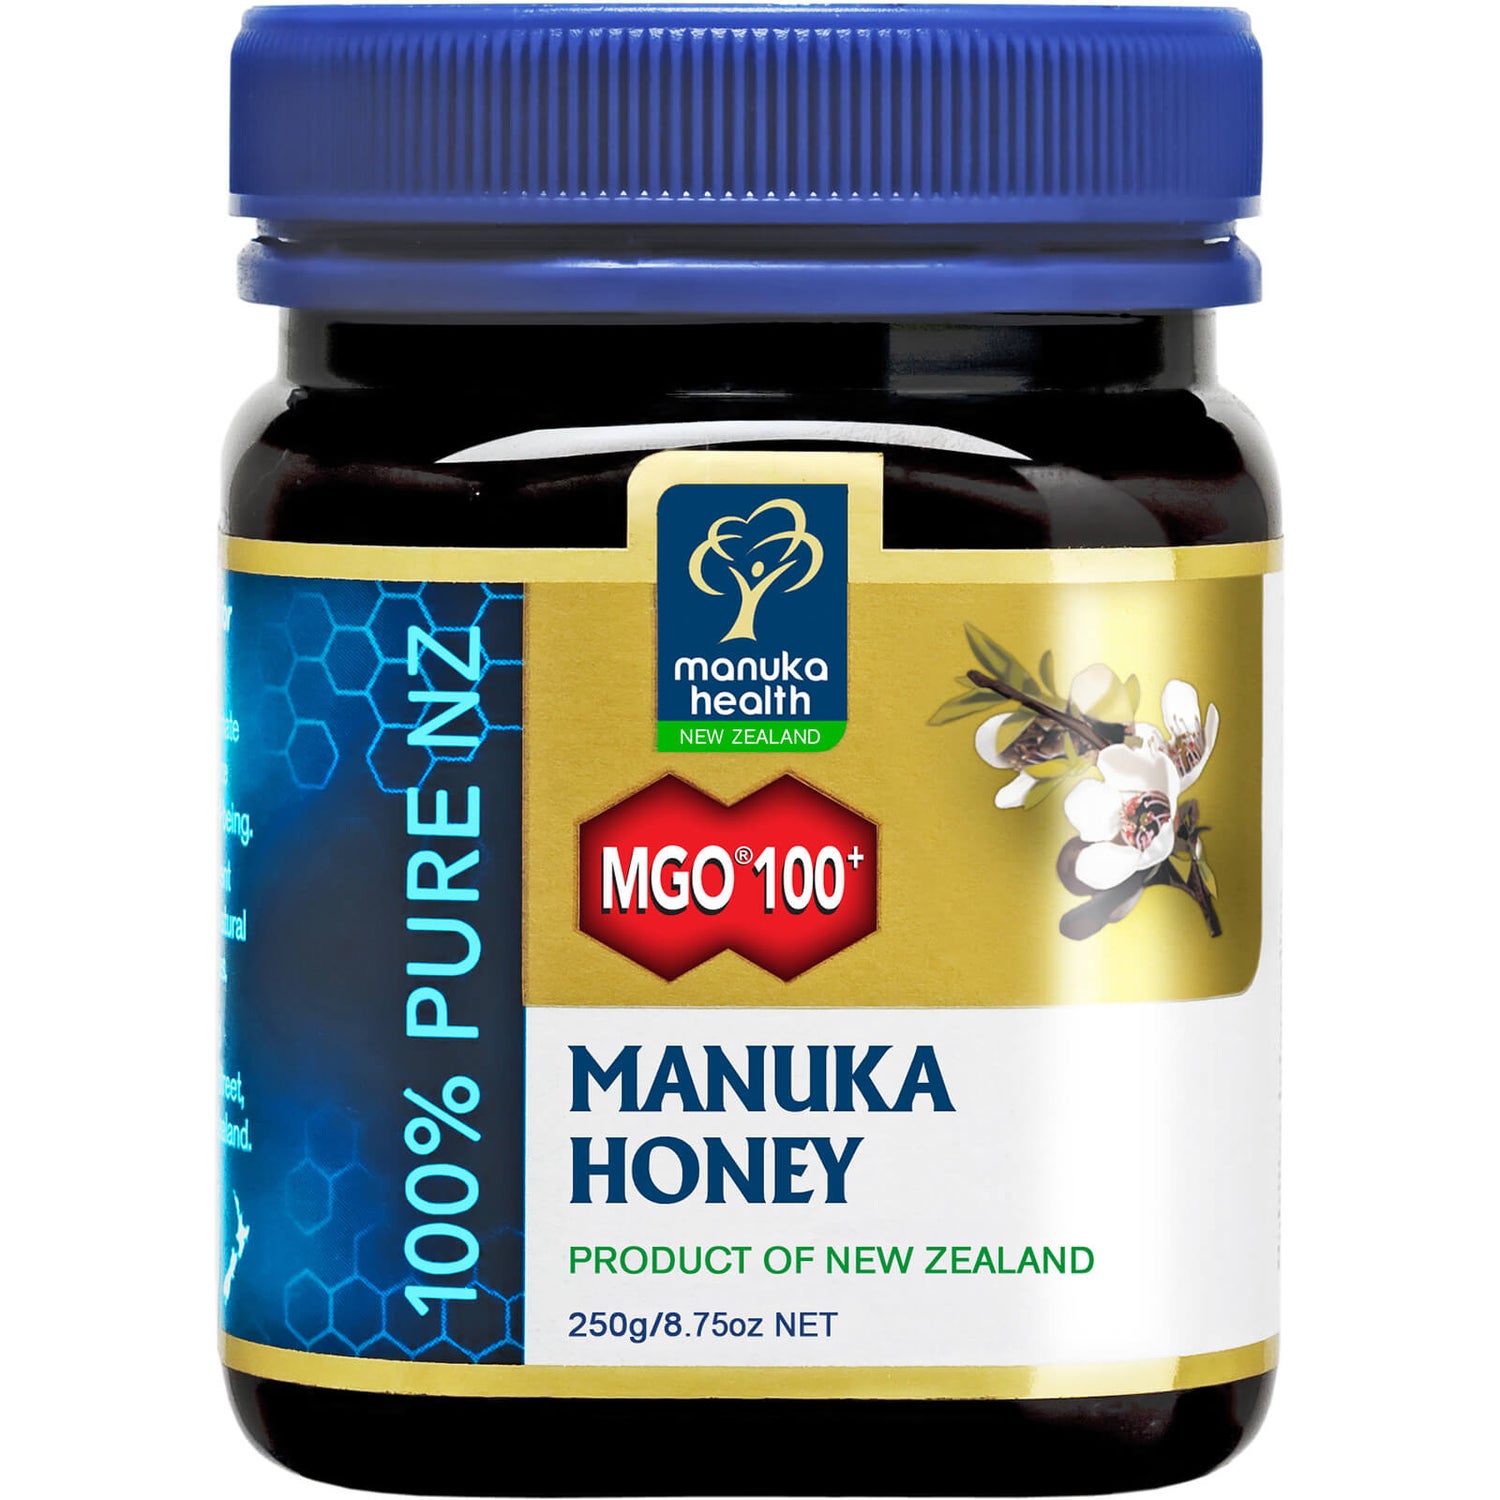 MGO 100+ Pure Manuka Honey Blend